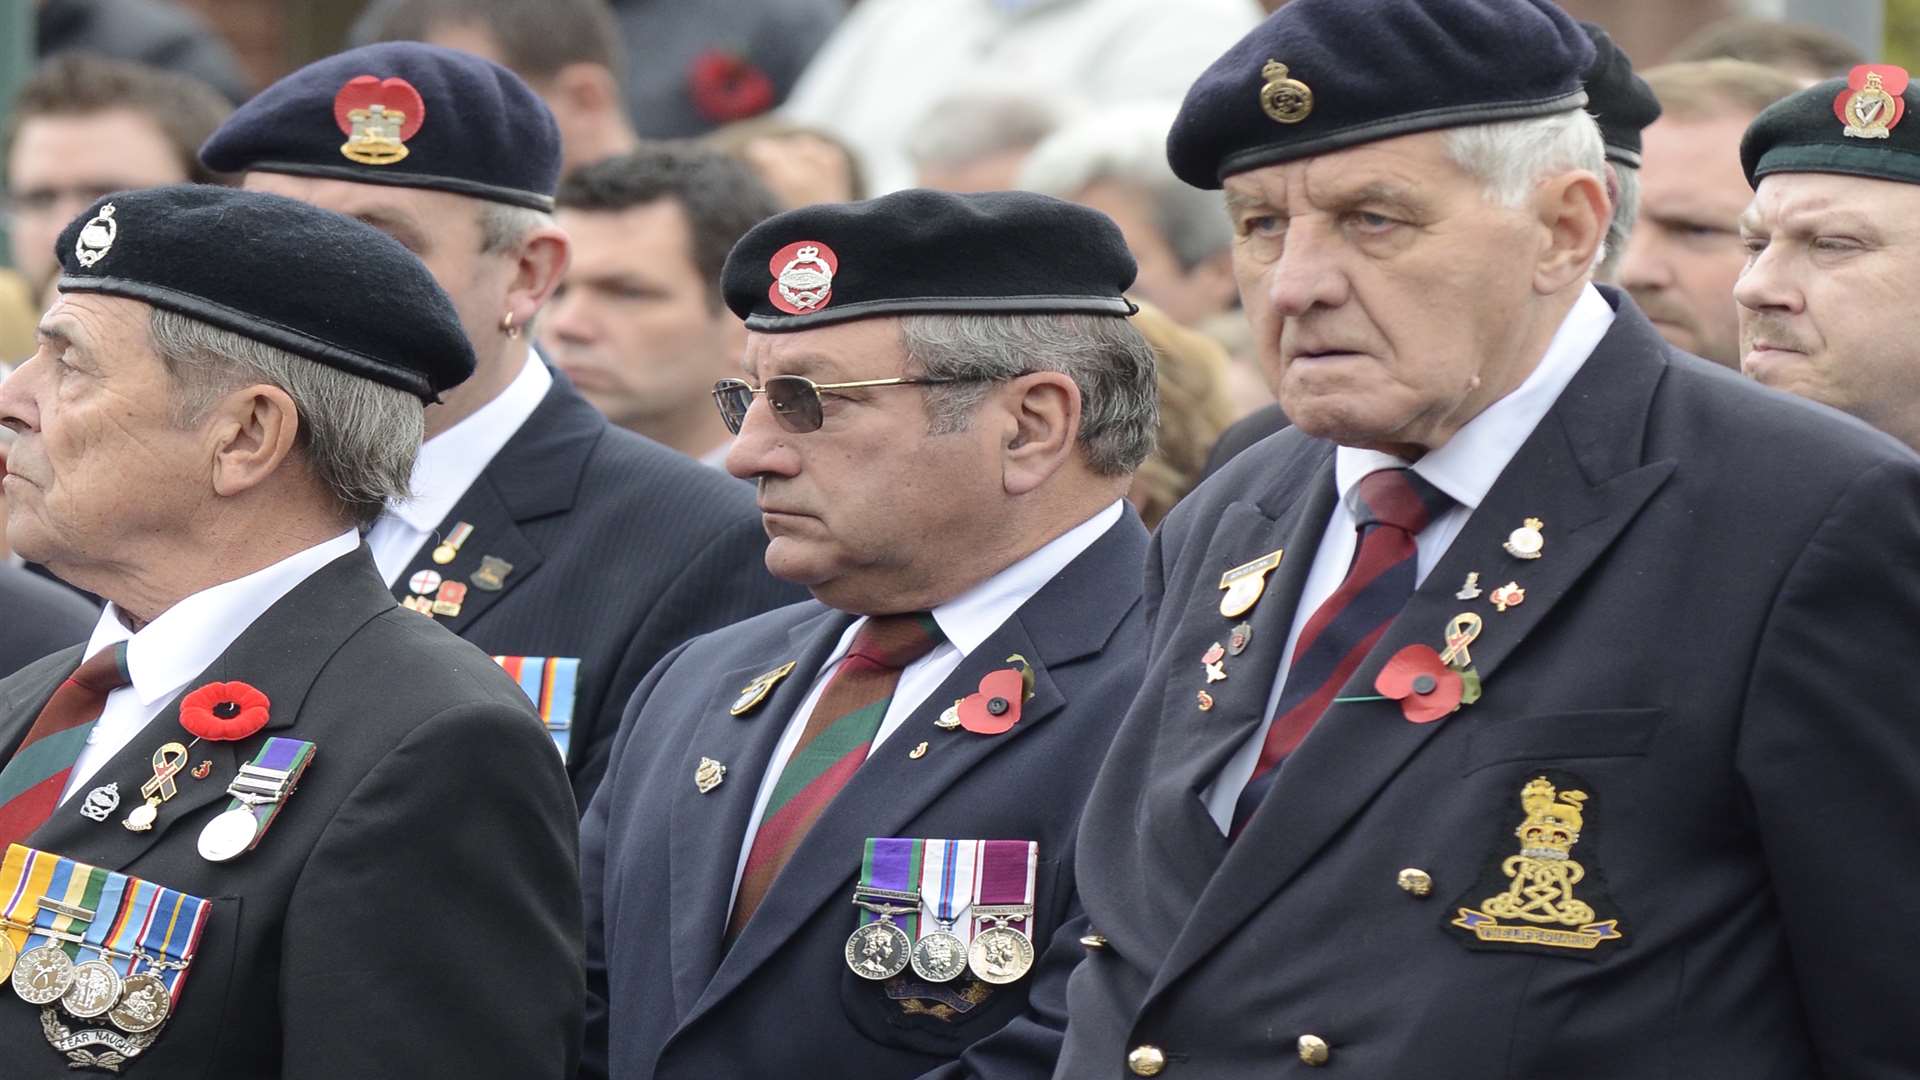 War veterans at a previous event